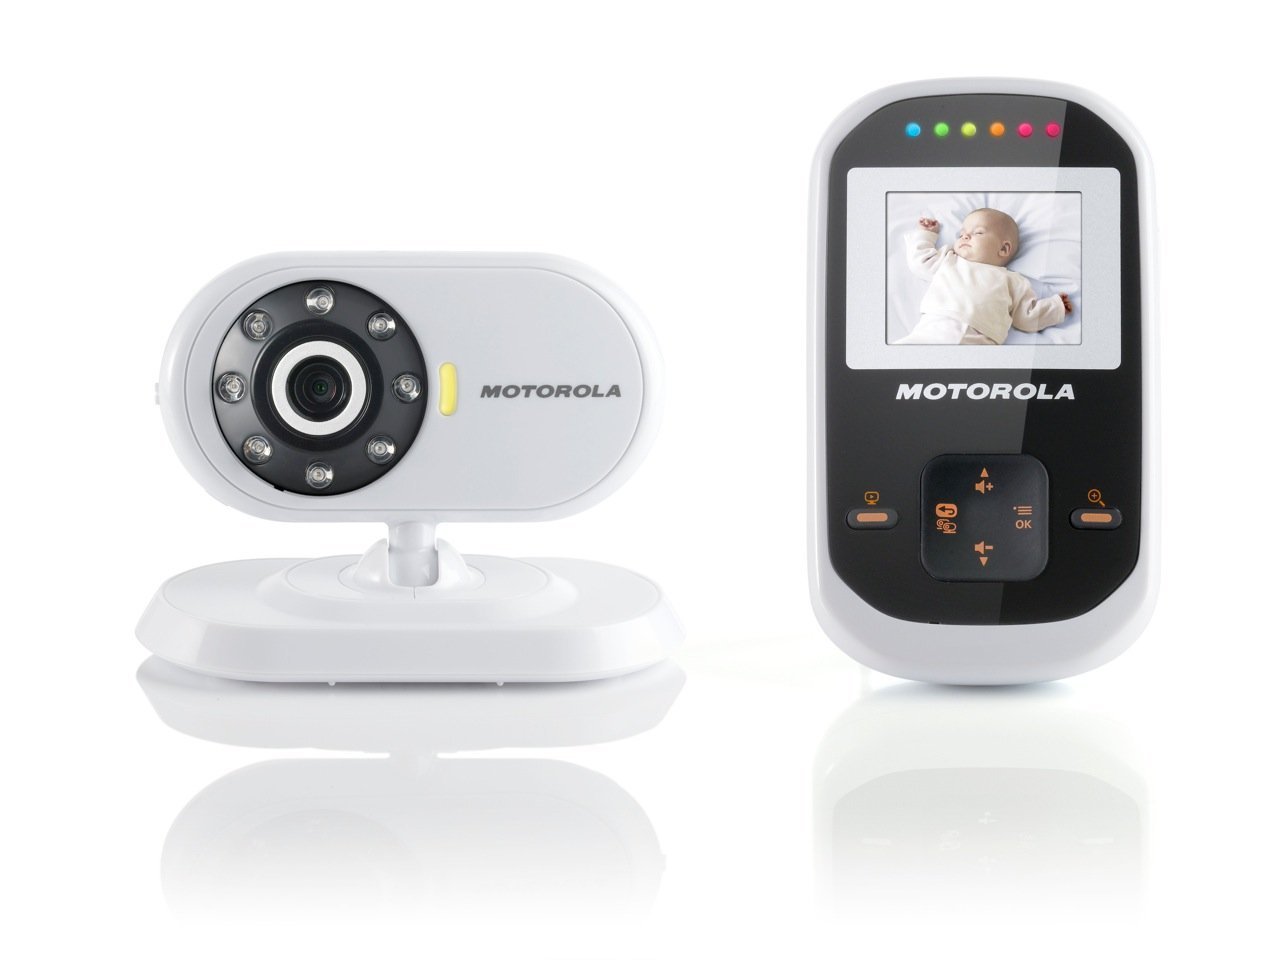 Motorola MBP18 Digital Video Baby Monitor with 1.8 inch Display - White/Black